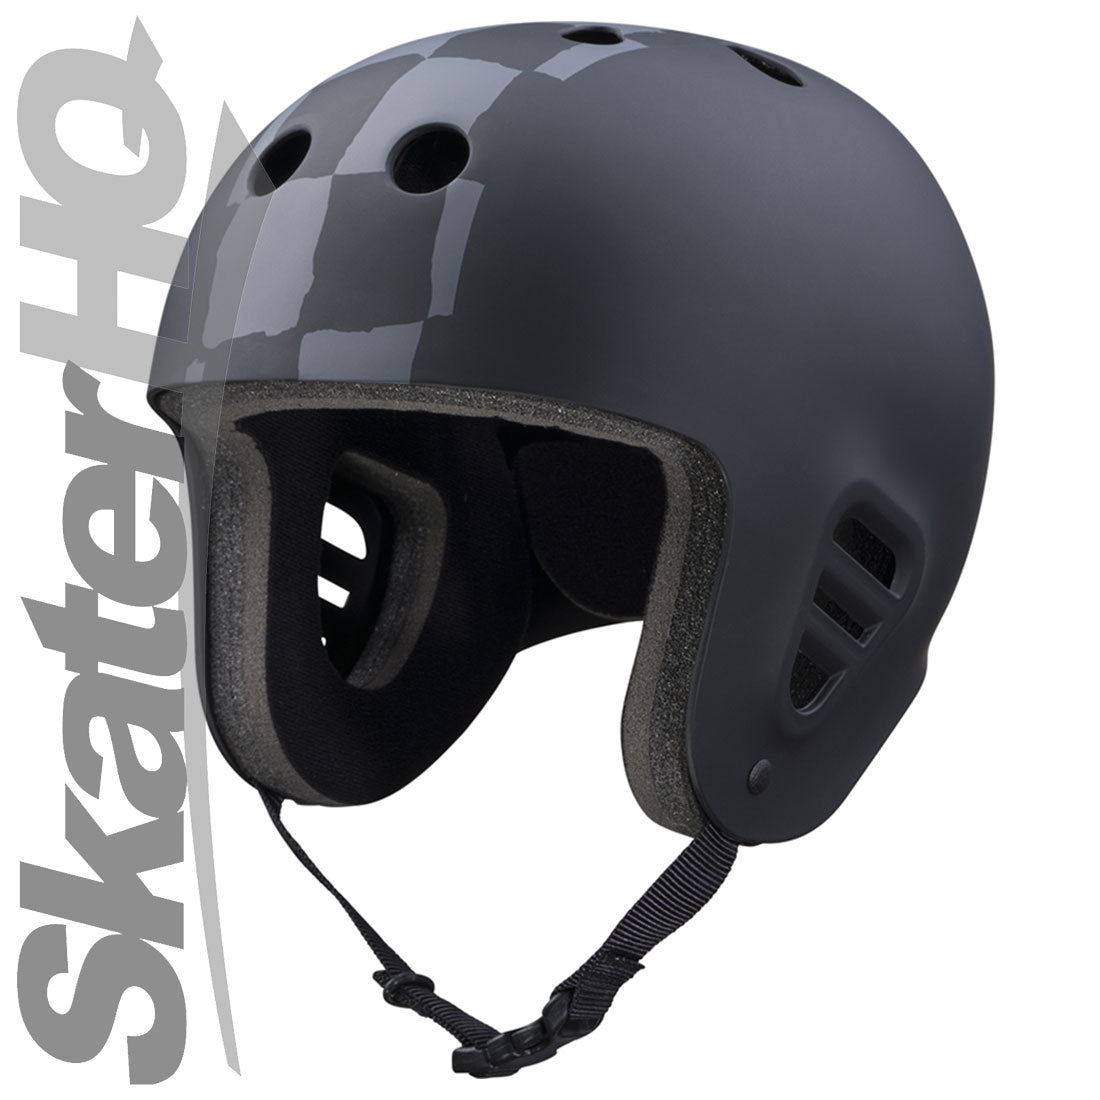 Pro-Tec Full Cut Skate - Gonz Checkers Sig Helmets